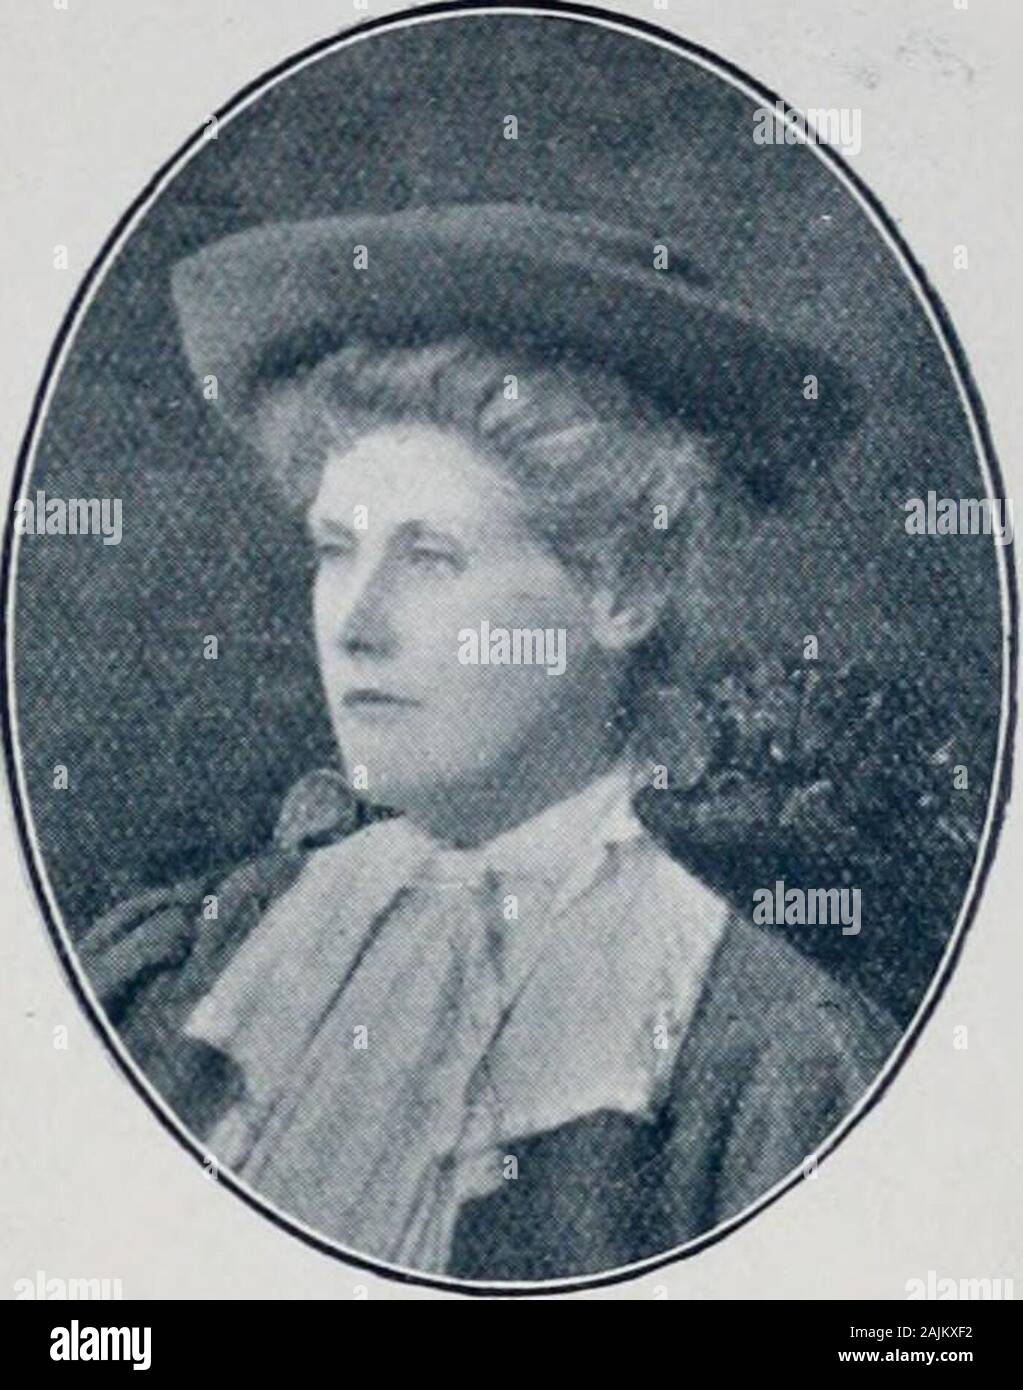 Souvenir and handbook of Feill a' Chomuinn Ghaidhealaich (The Highland Association Bazaar) 1907 . uks. r,i&gt;, atholdkne. MI&gt; HKANT i&gt;K KoTHIKMKKl Hl&lt;. HON. SECRETARY AND TREASURER.E. M. KARROX, Esq., Solicitor, Inverness. Lady Mary Grant of RothiemurehusMiss Grant, of Rothiemurchus.MRS. Ross, Atholdene, Inverness.Mrs. Fraser, of Eunchrew.Miss Biscoe, of Newton. Mrs. Klack, Glasgow.Miss Macpherson of Cluny. MlSS ROSALIND GRANT. JIlSS Mulennan. Inverness. STALL-HOLDERS. Mrs. Lawson, Glendruldh, Inverness.Mrs. Fbasbb, Maryfisld, Inverness.Mrs. Mackenzie, Ctaidarrock, InvernessMrs. Mac Stock Photo